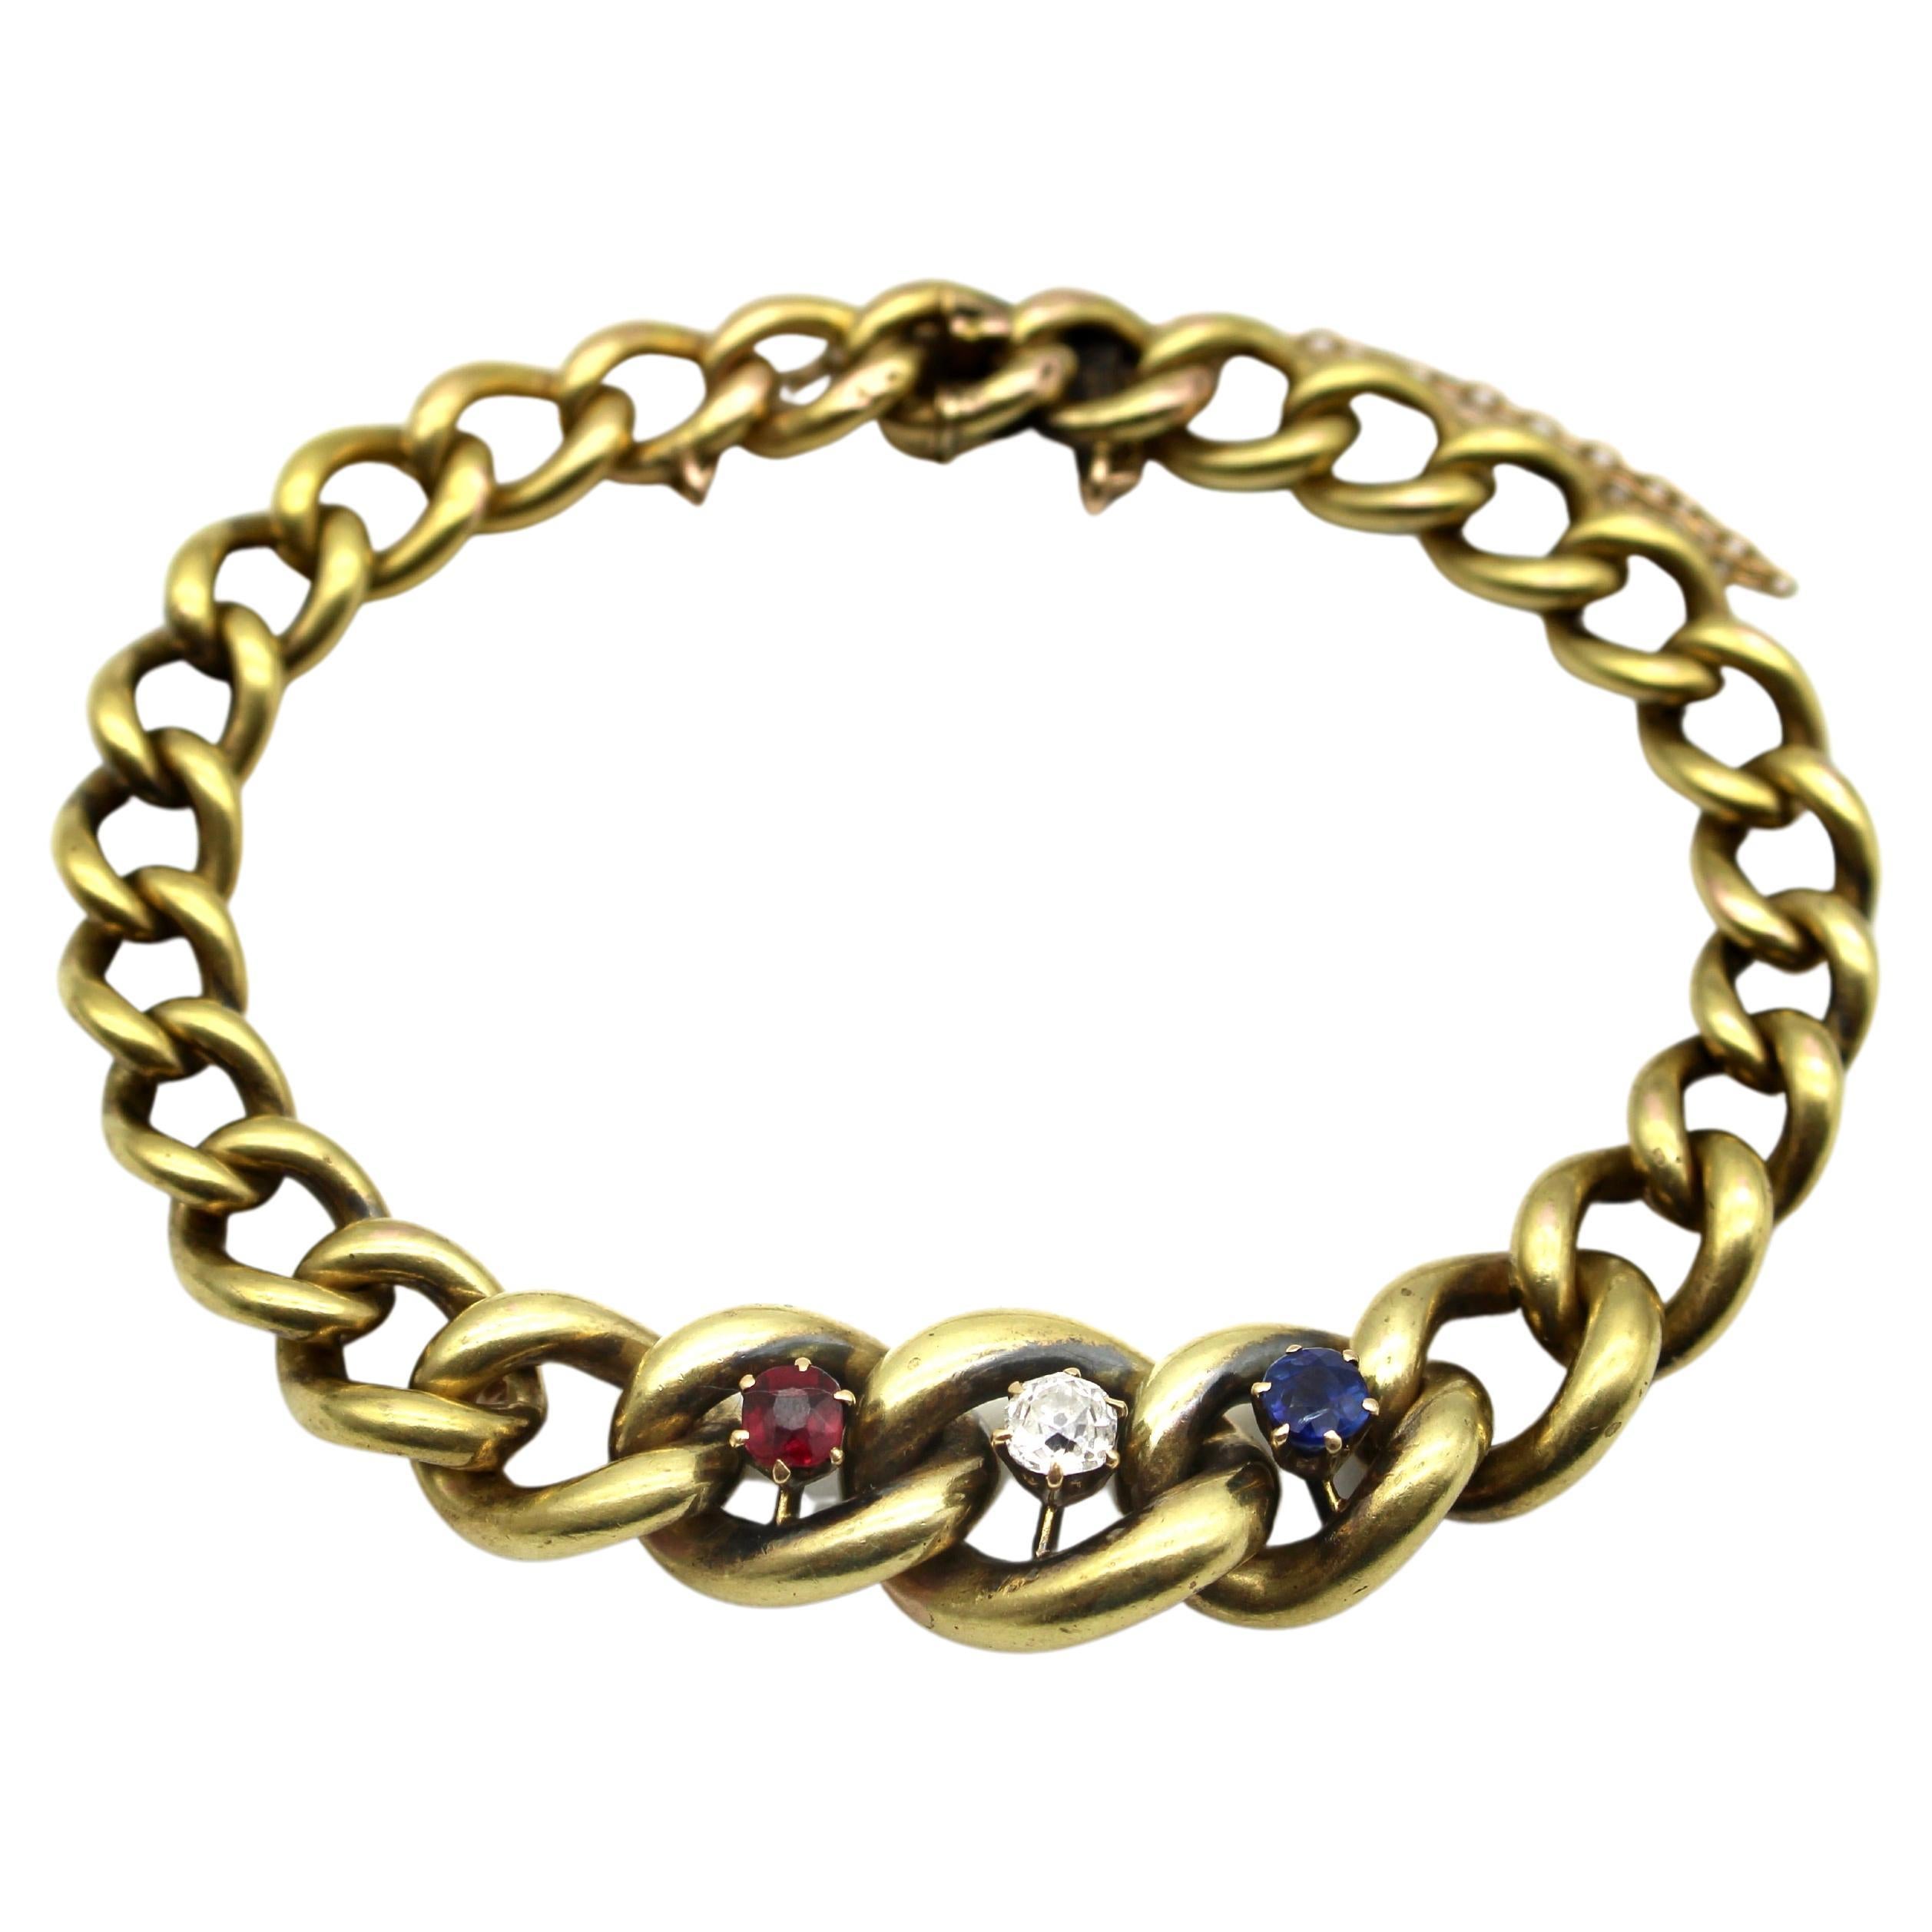 14K Gold Edwardian Graduated Curb Link Bracelet with Ruby, Diamond & Sapphire